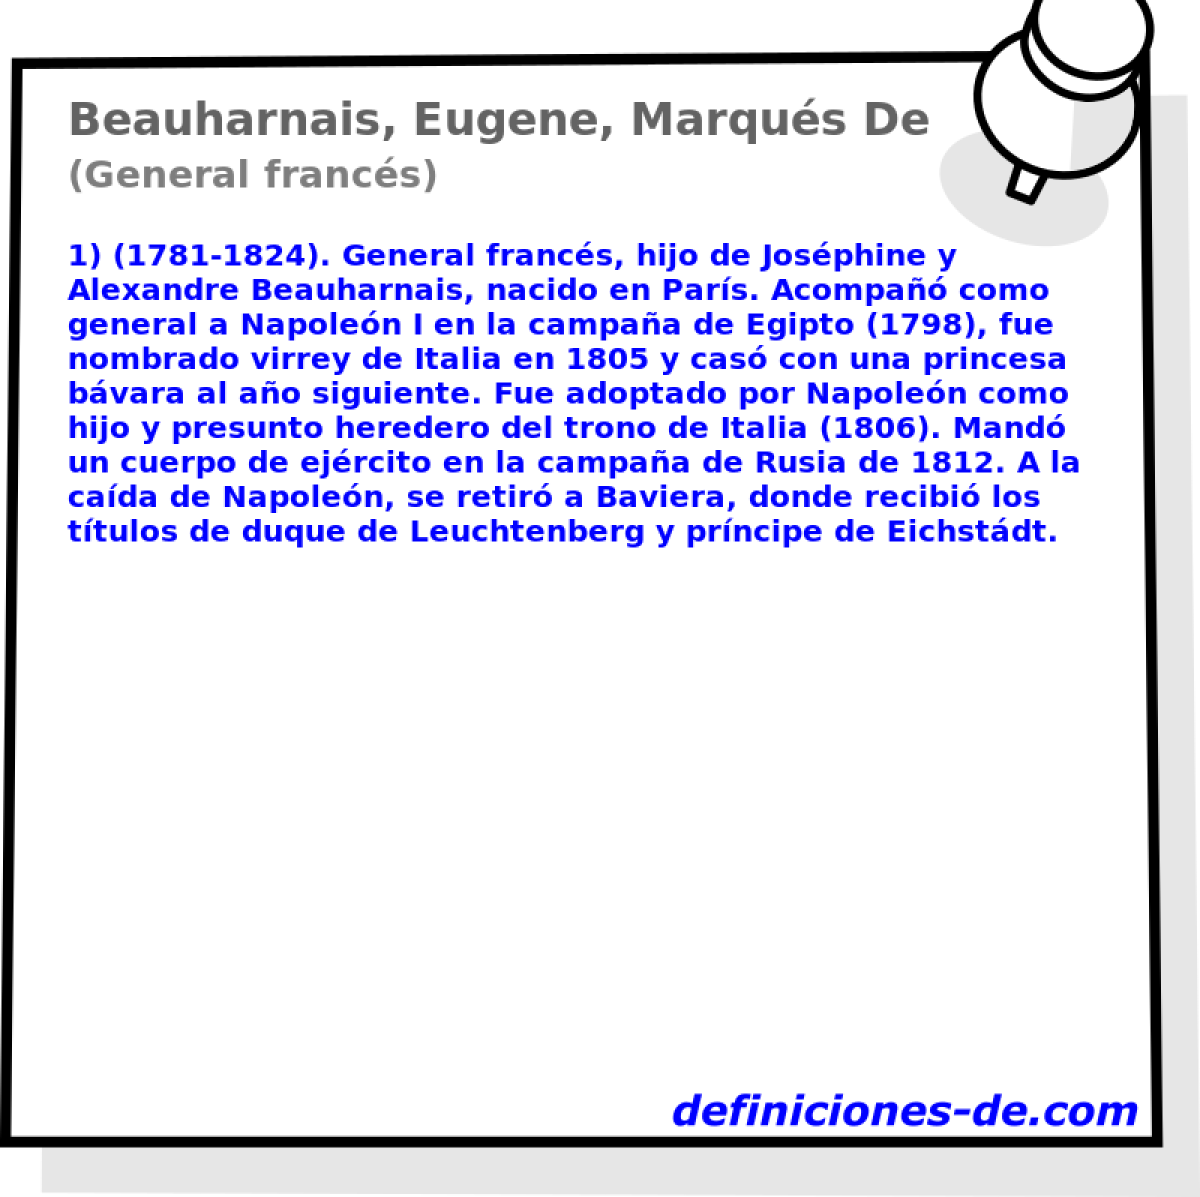 Beauharnais, Eugene, Marqus De (General francs)